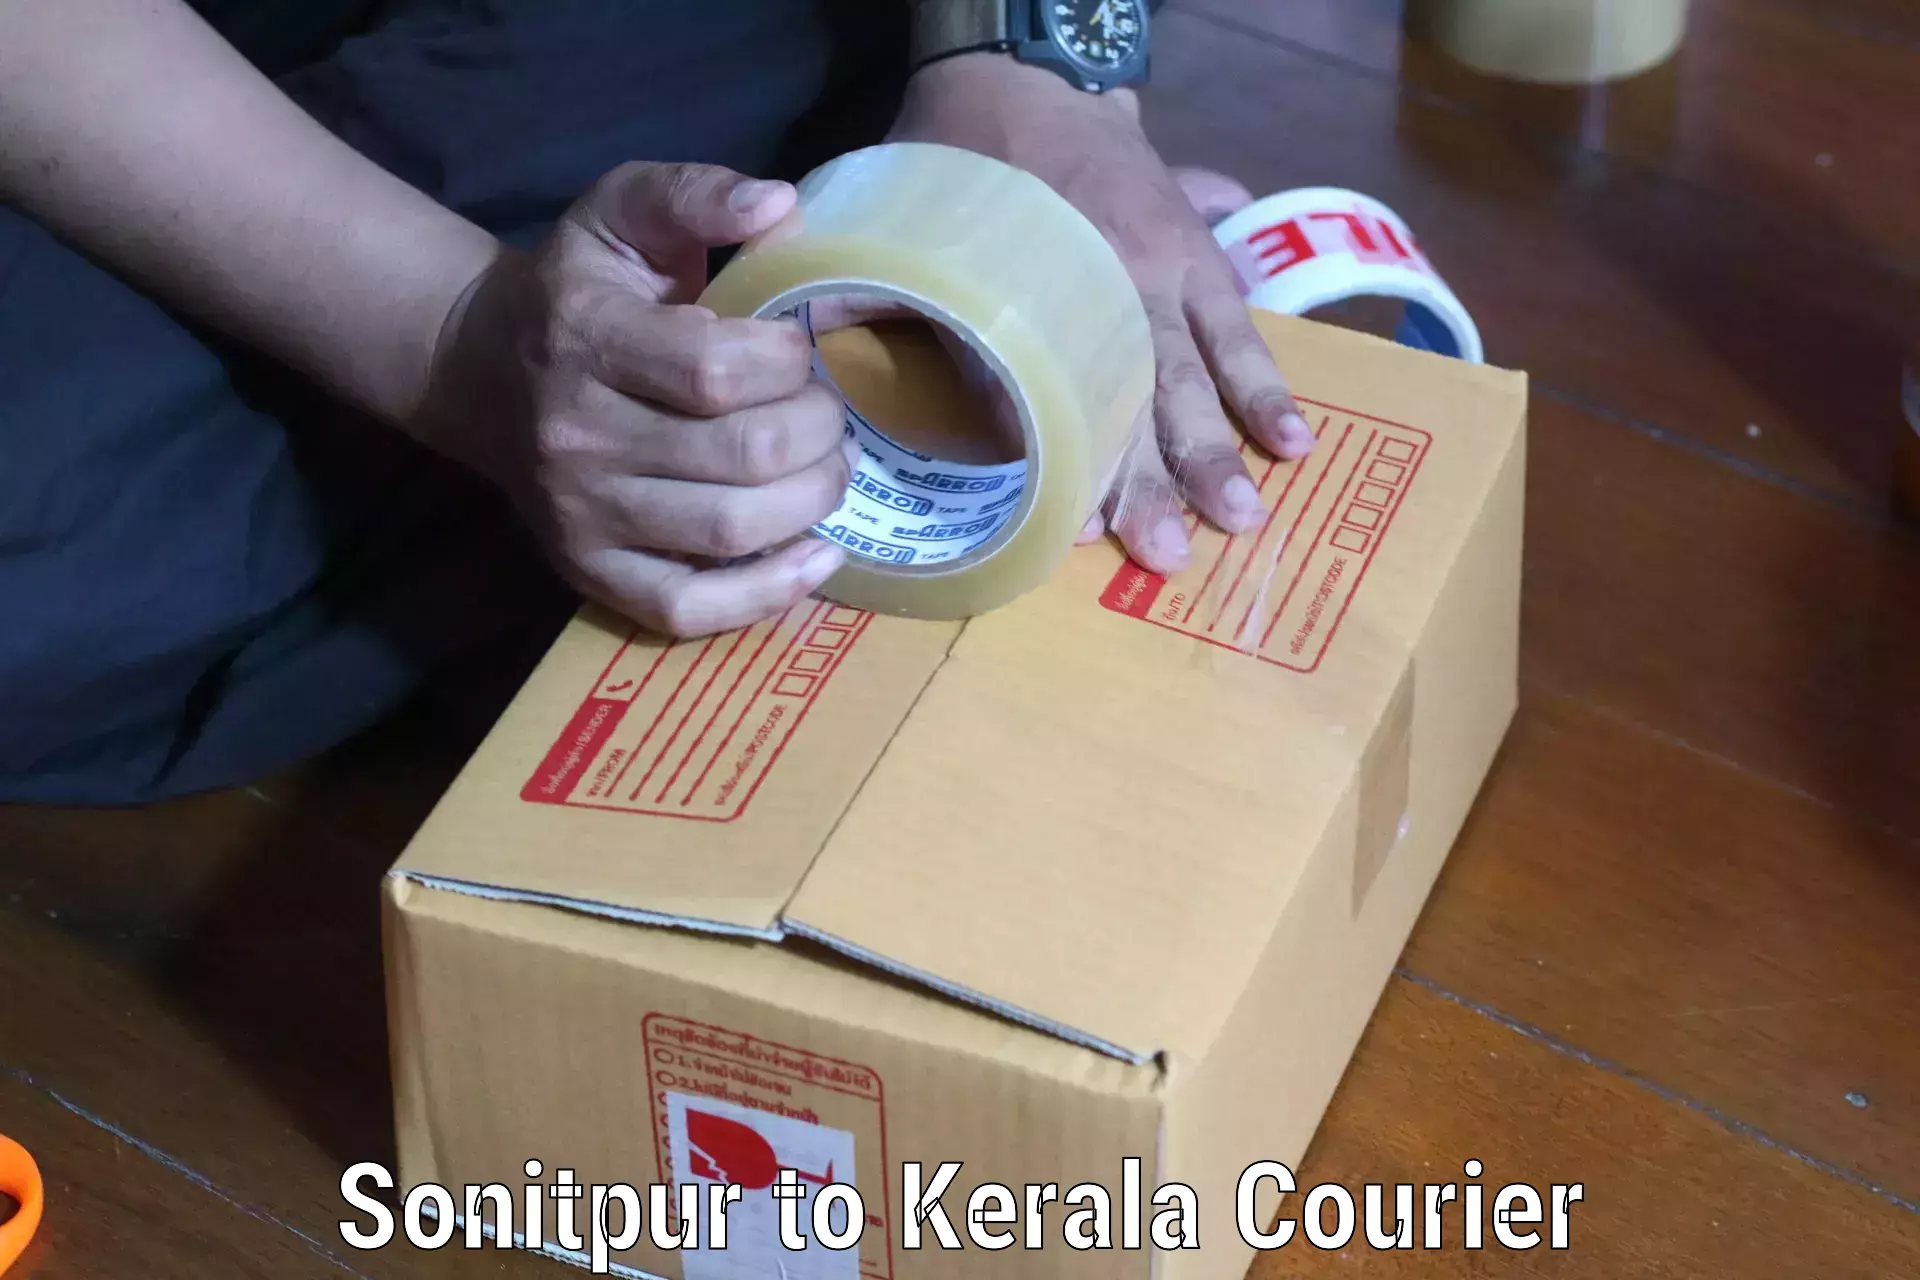 Urban courier service Sonitpur to Cochin Port Kochi